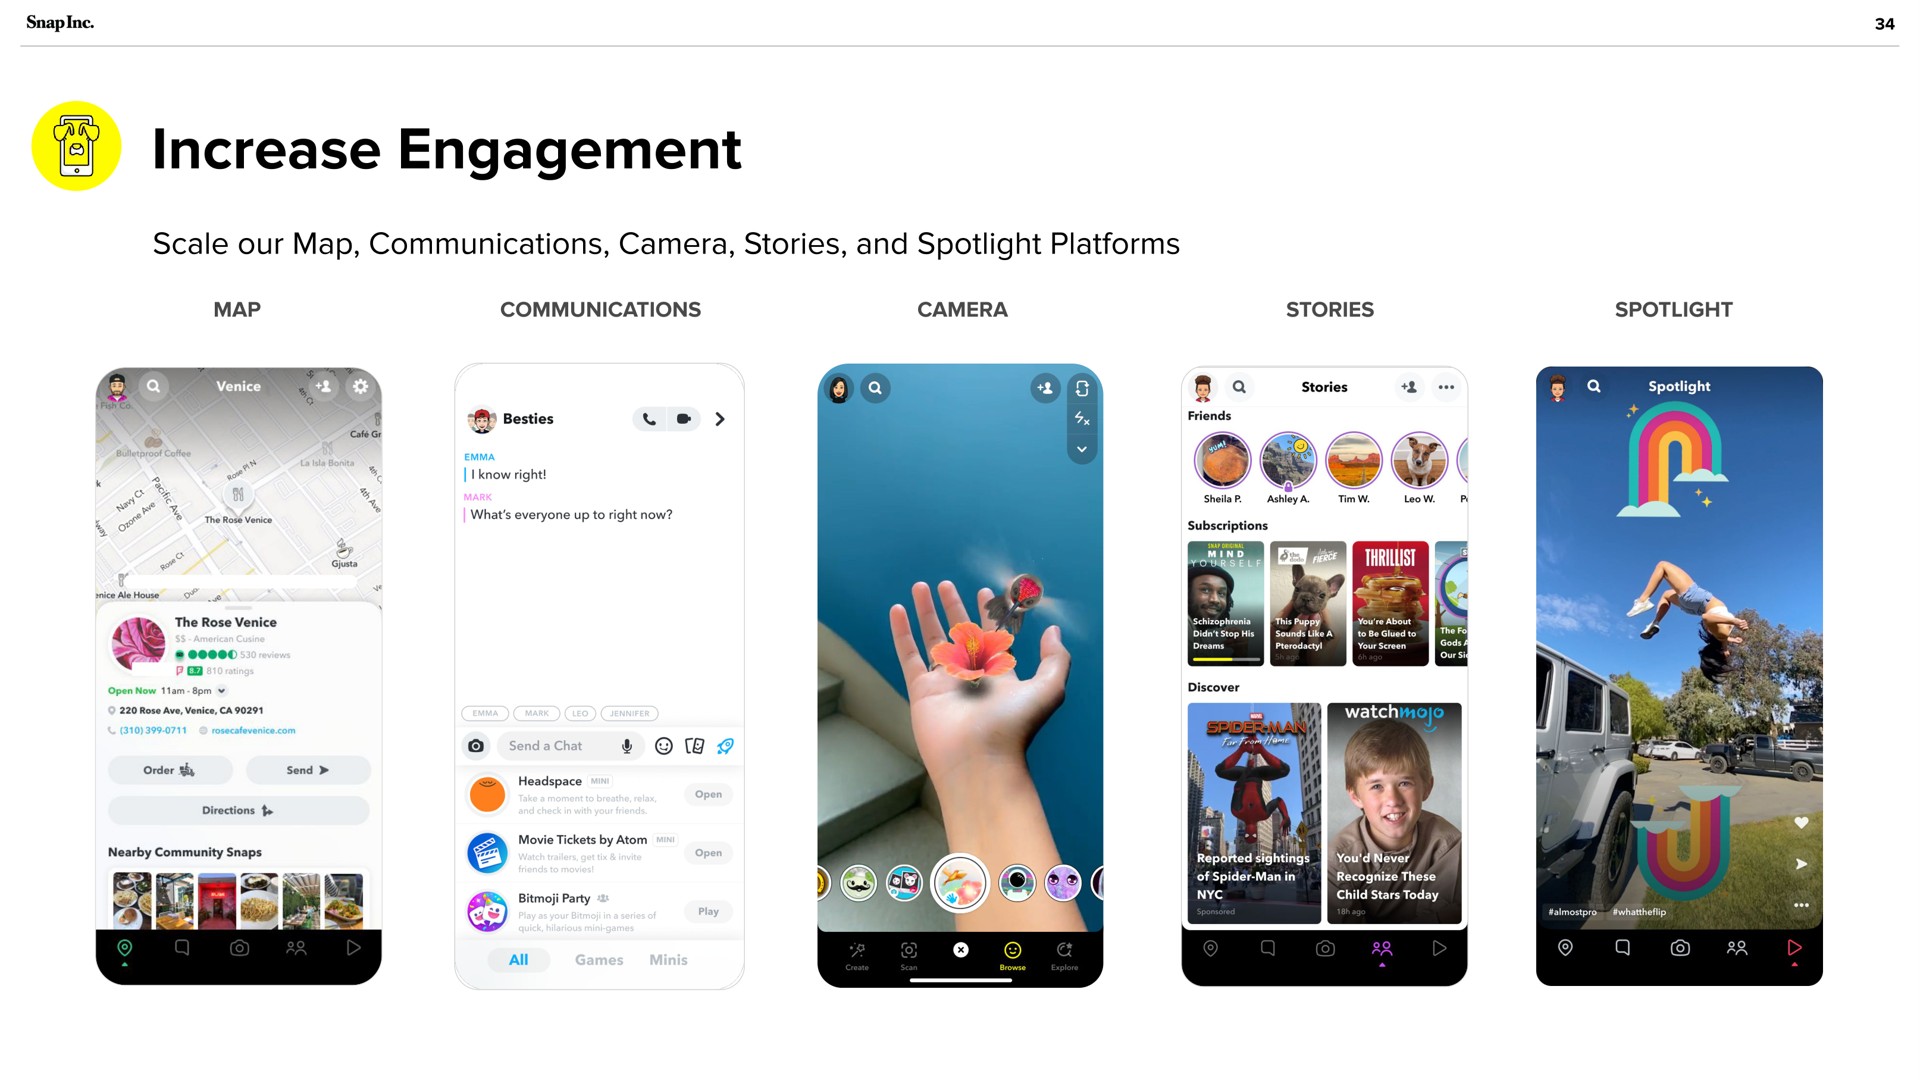 increase engagement | Snap Inc